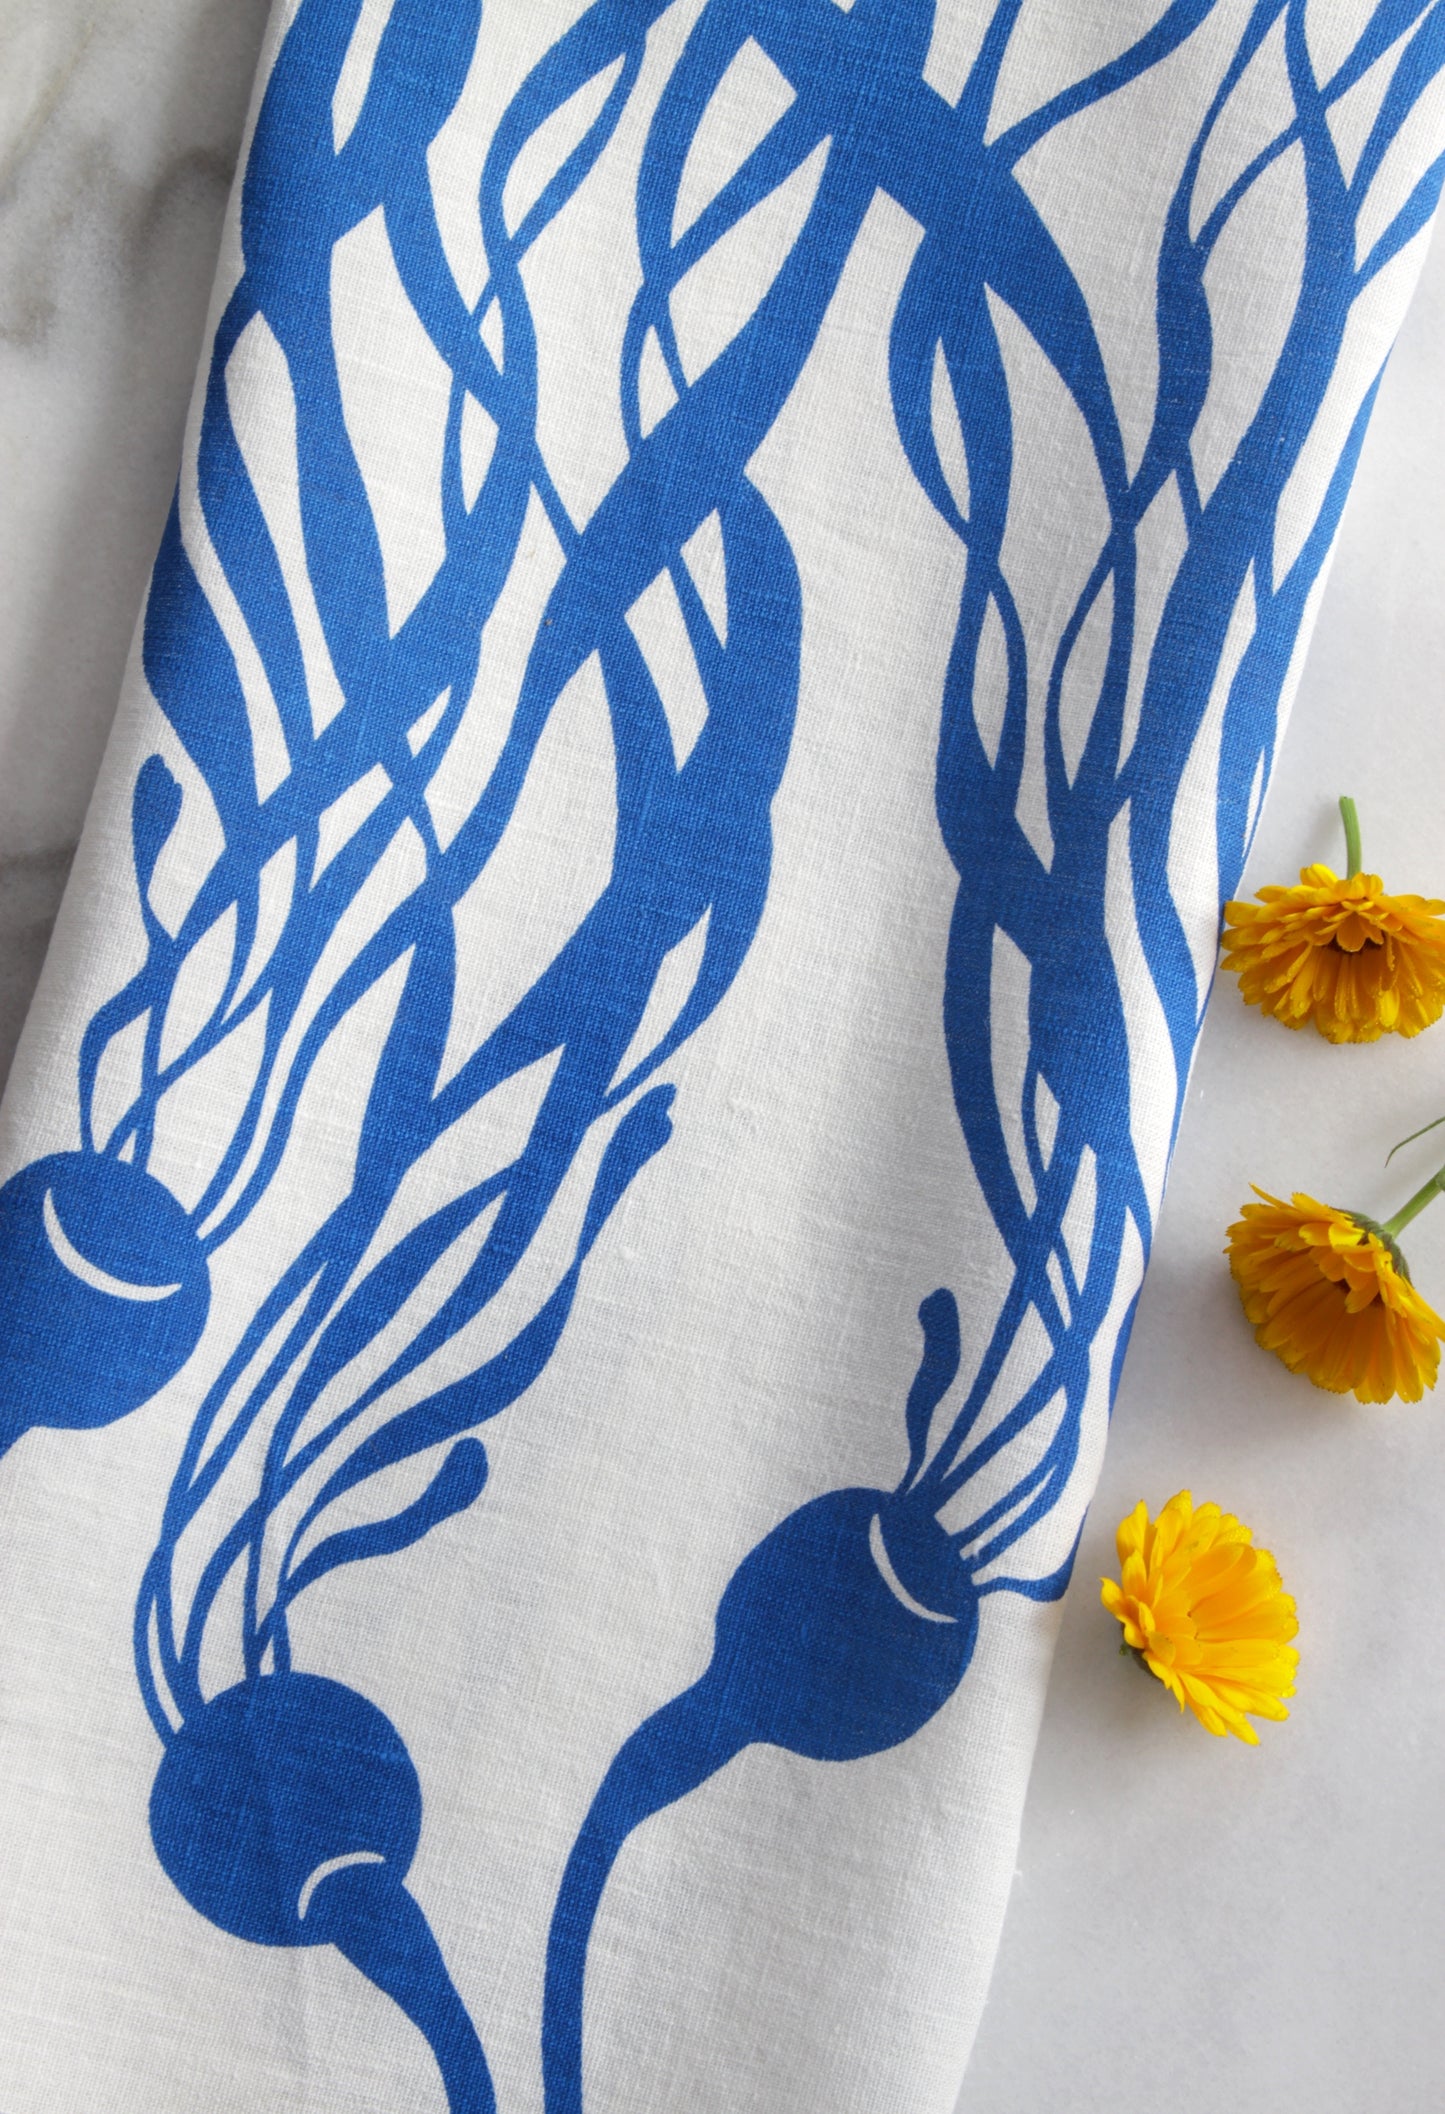 Kelp Kitchen Towel in Jaunty Blue on White Linen